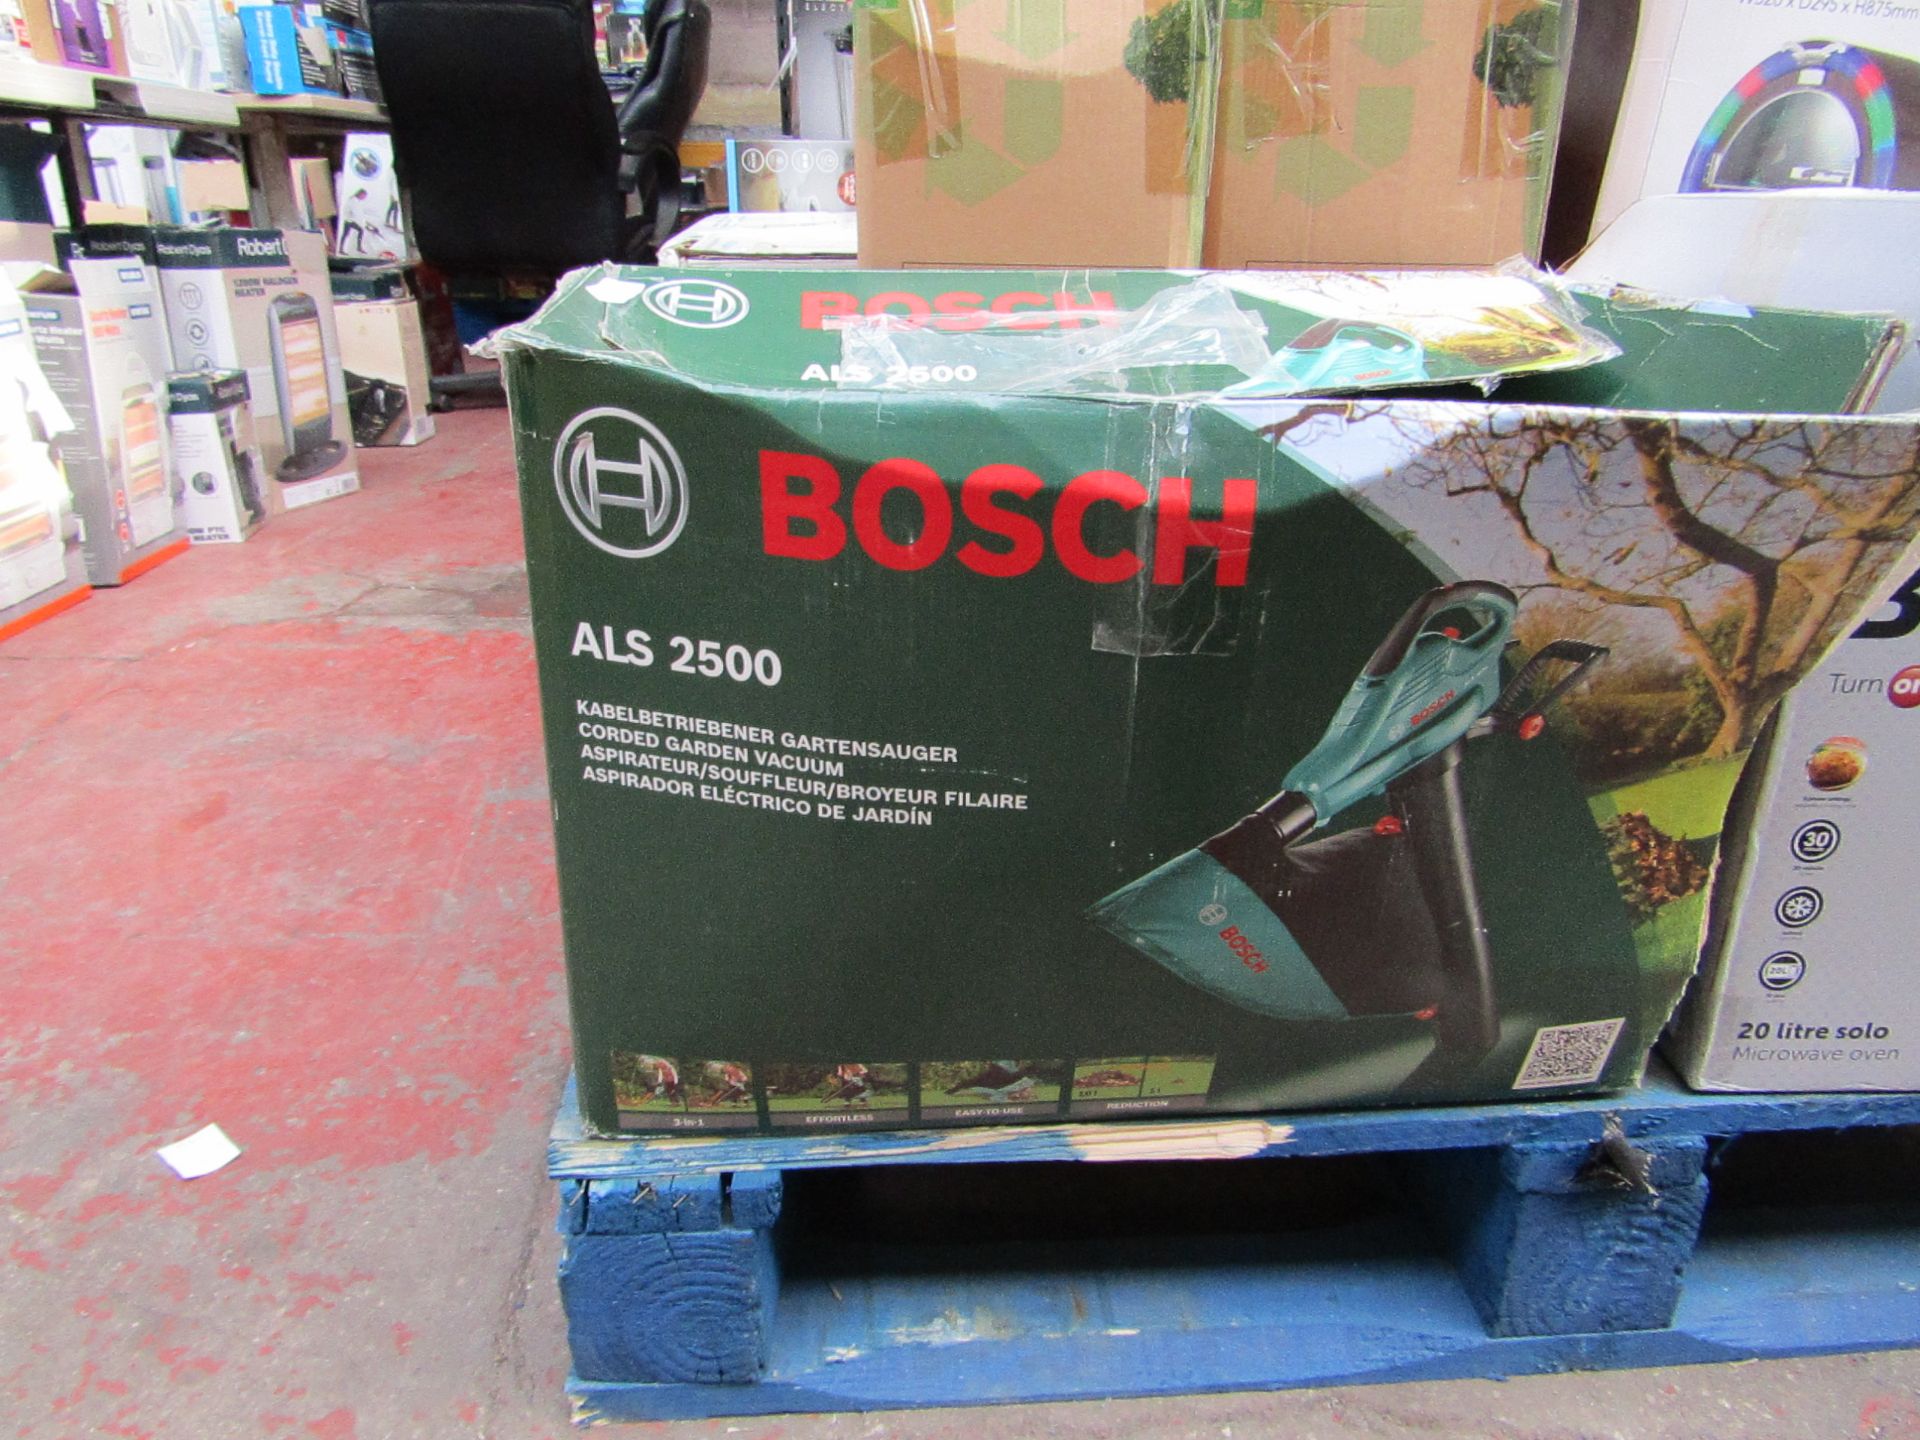 Bosch ALS 2500 garden vacuum boxed